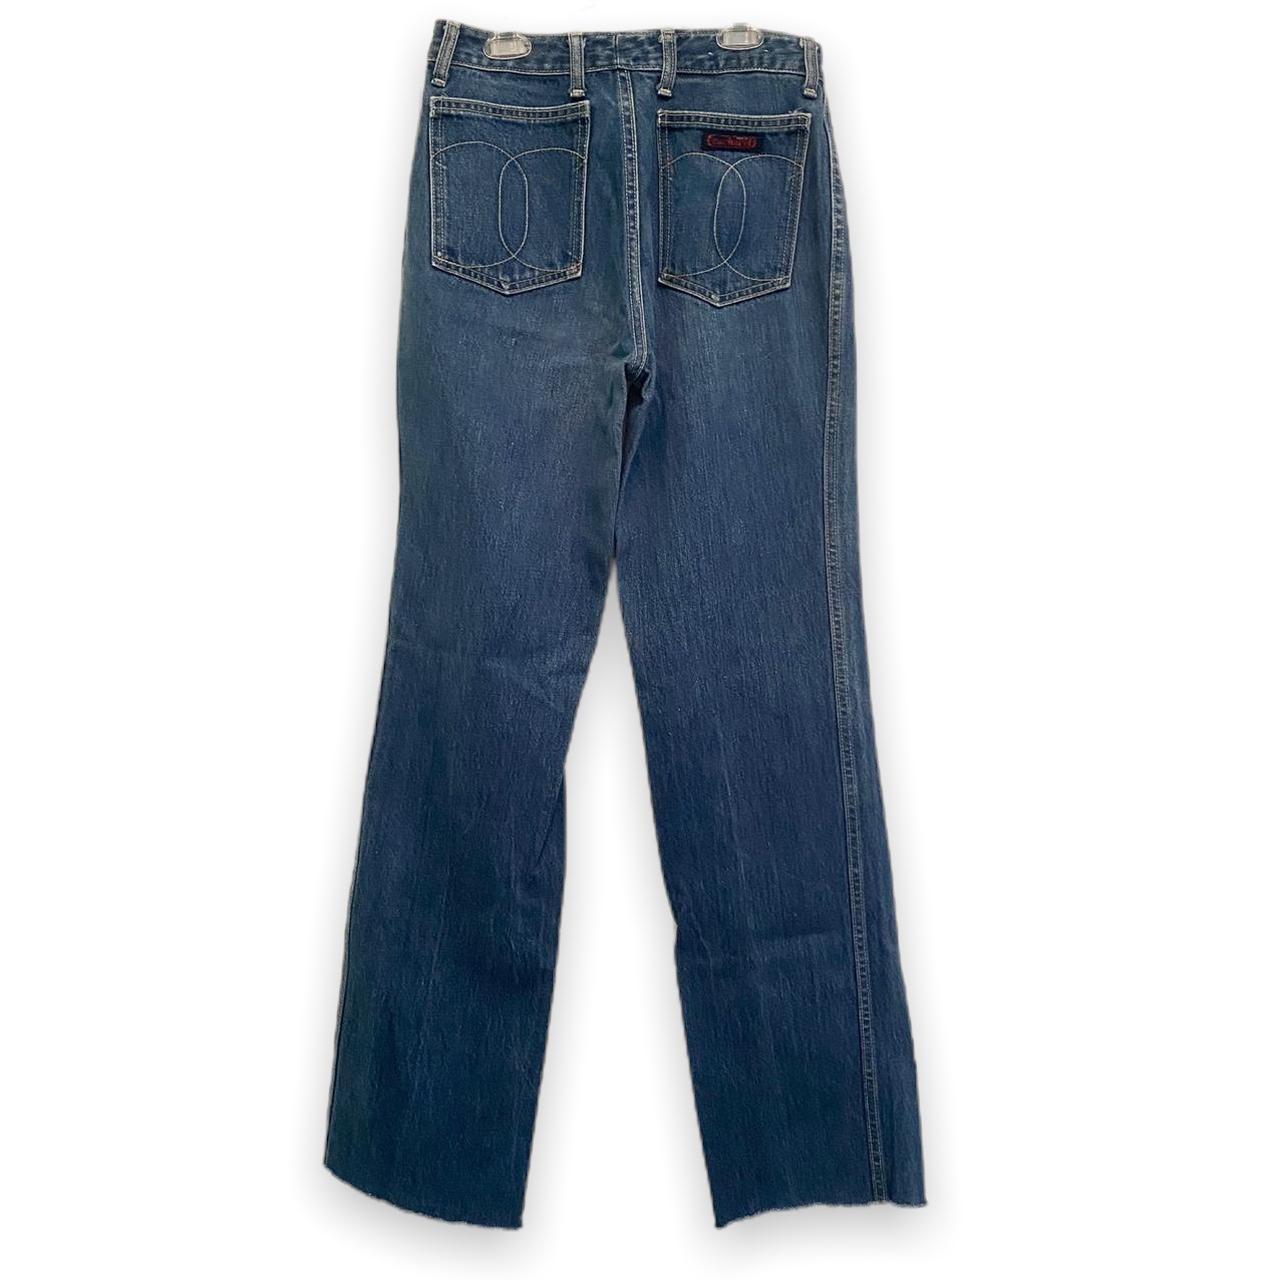 Cacharel Women's Blue Jeans